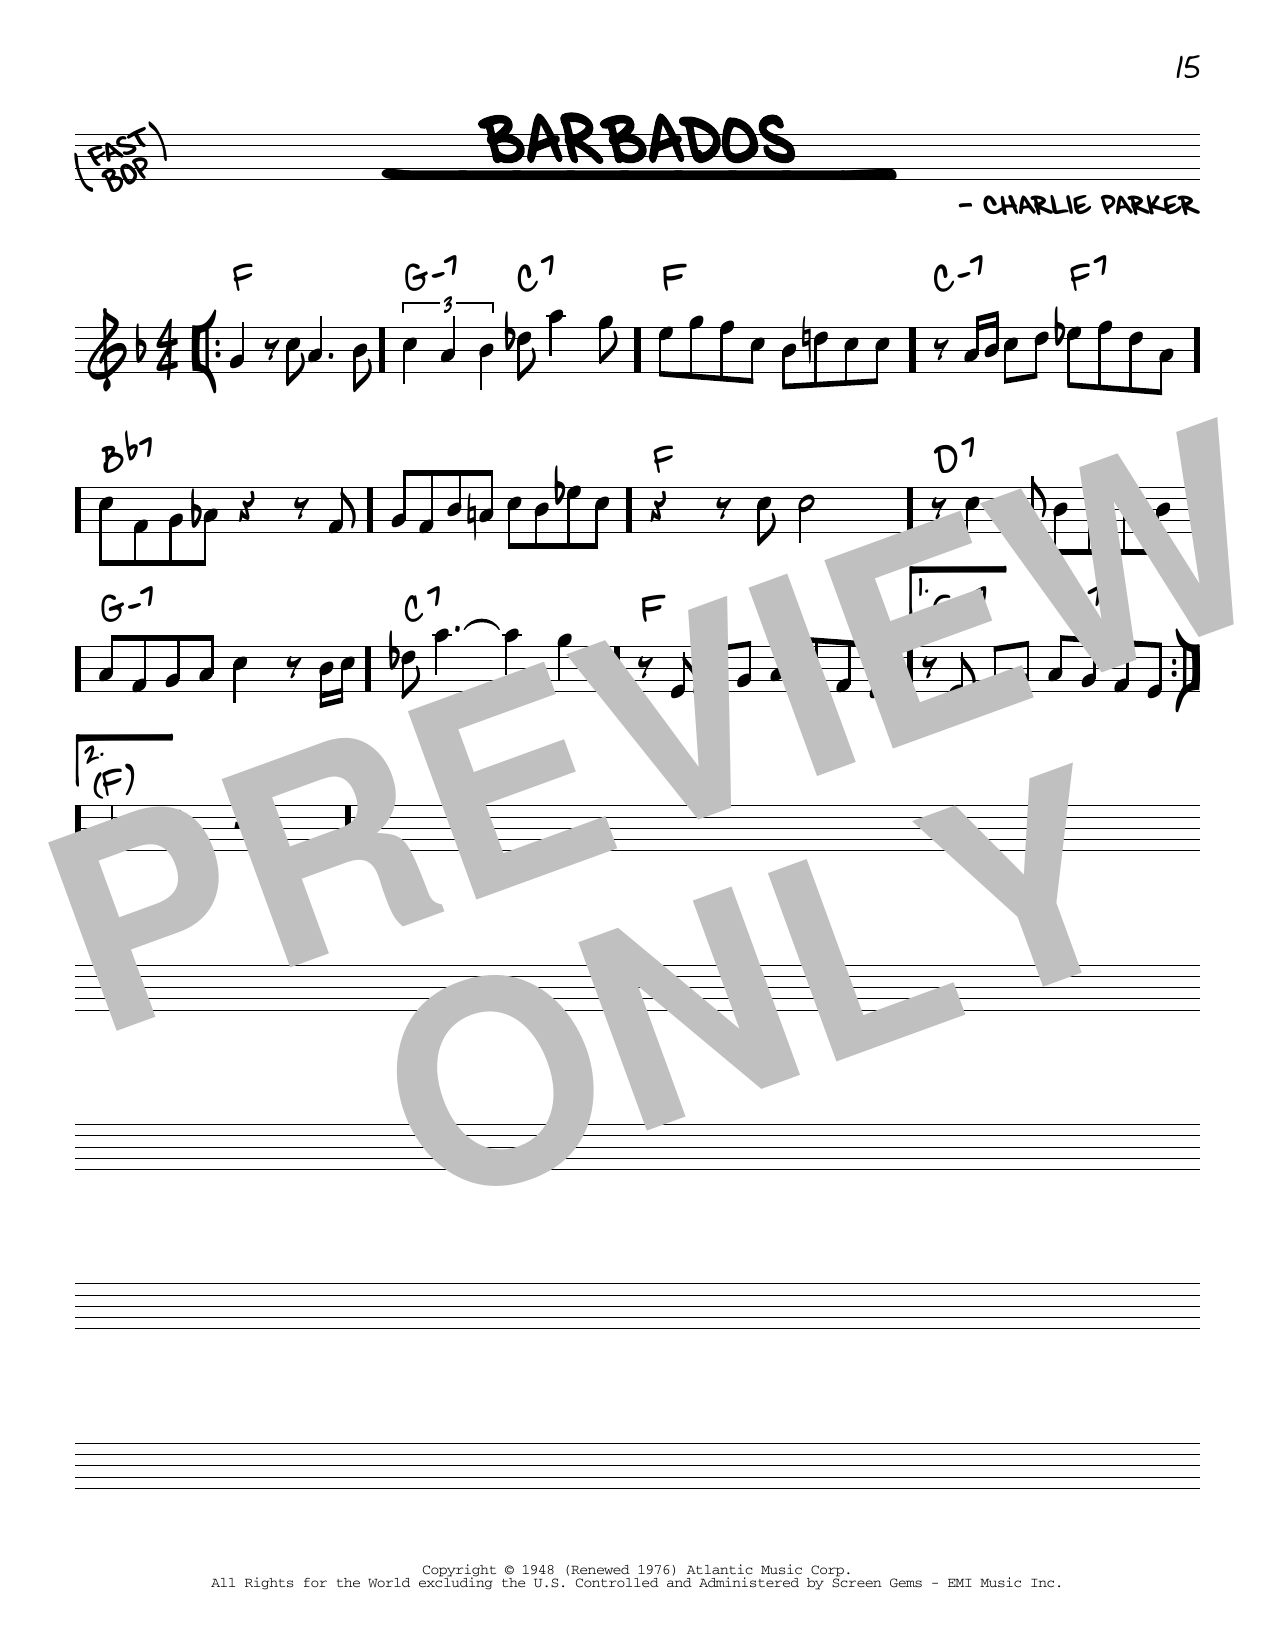 Charlie Parker Barbados Sheet Music Notes & Chords for Transcribed Score - Download or Print PDF